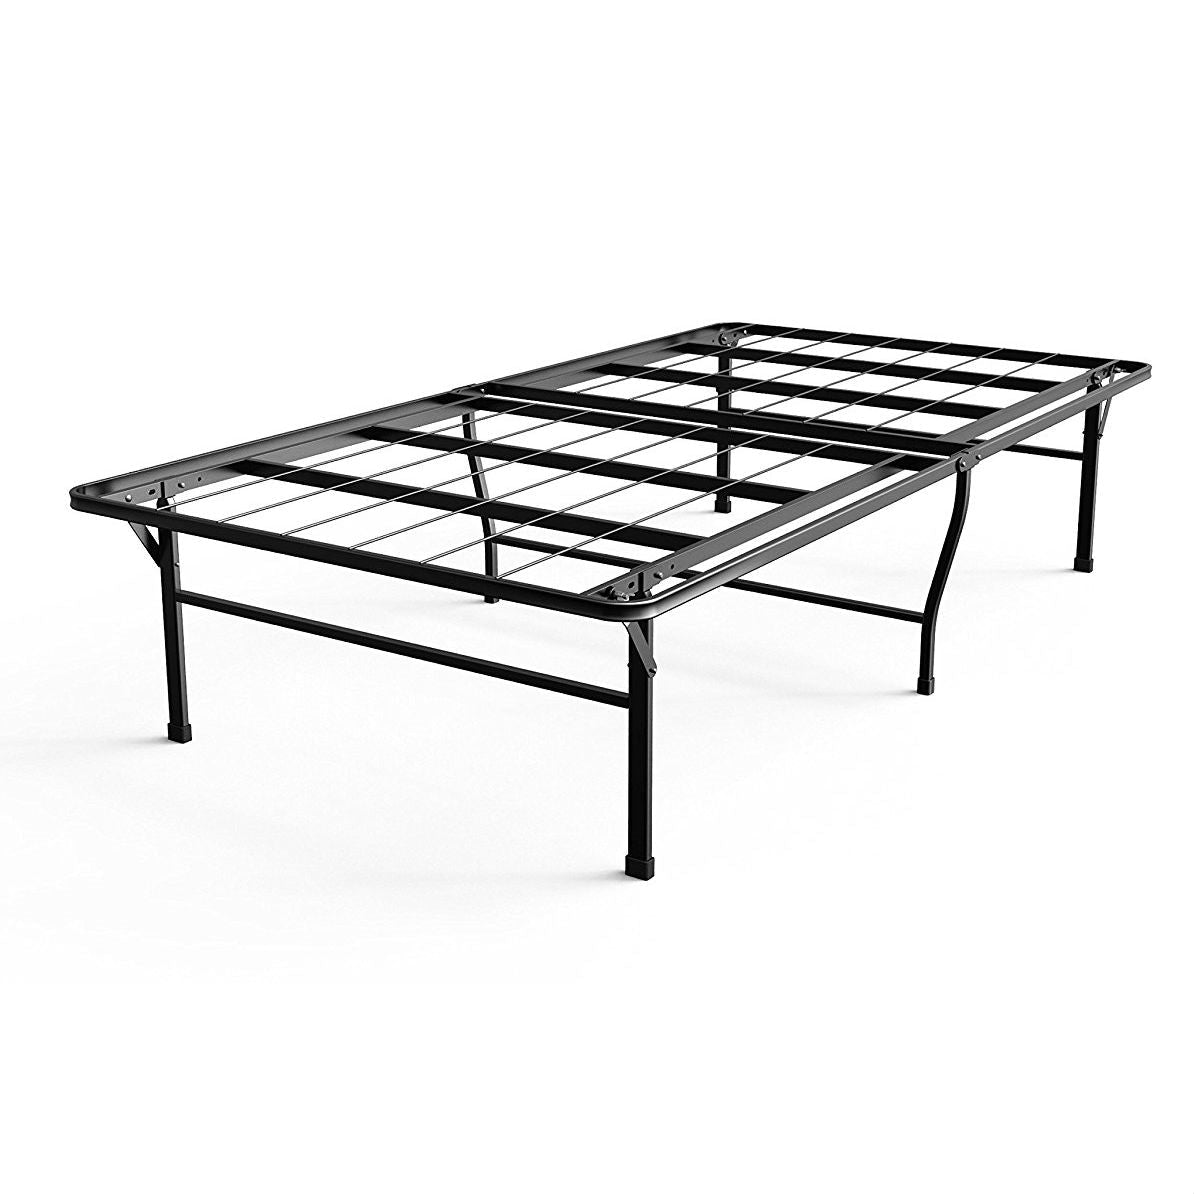 Bedroom > Bed Frames > Platform Beds - Twin XL College Dorm 16-inch Tall Metal Platform Bed Frame With Storage Space